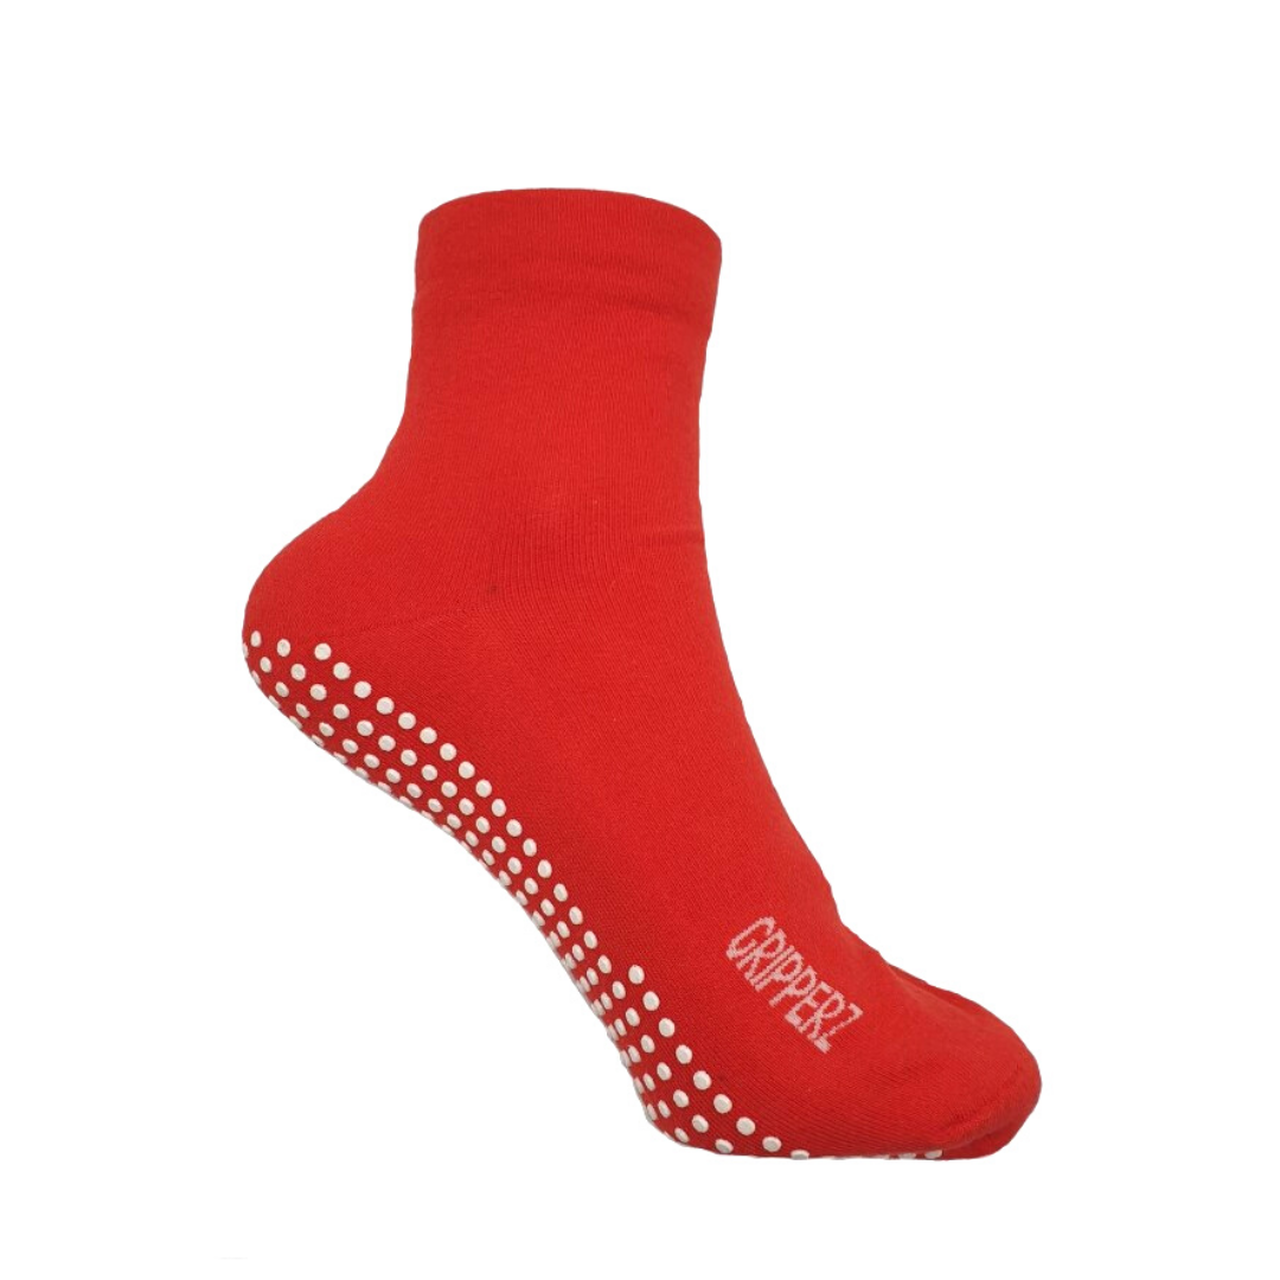 Maxi Hospital Non-Slip Socks in Red - The Sockery